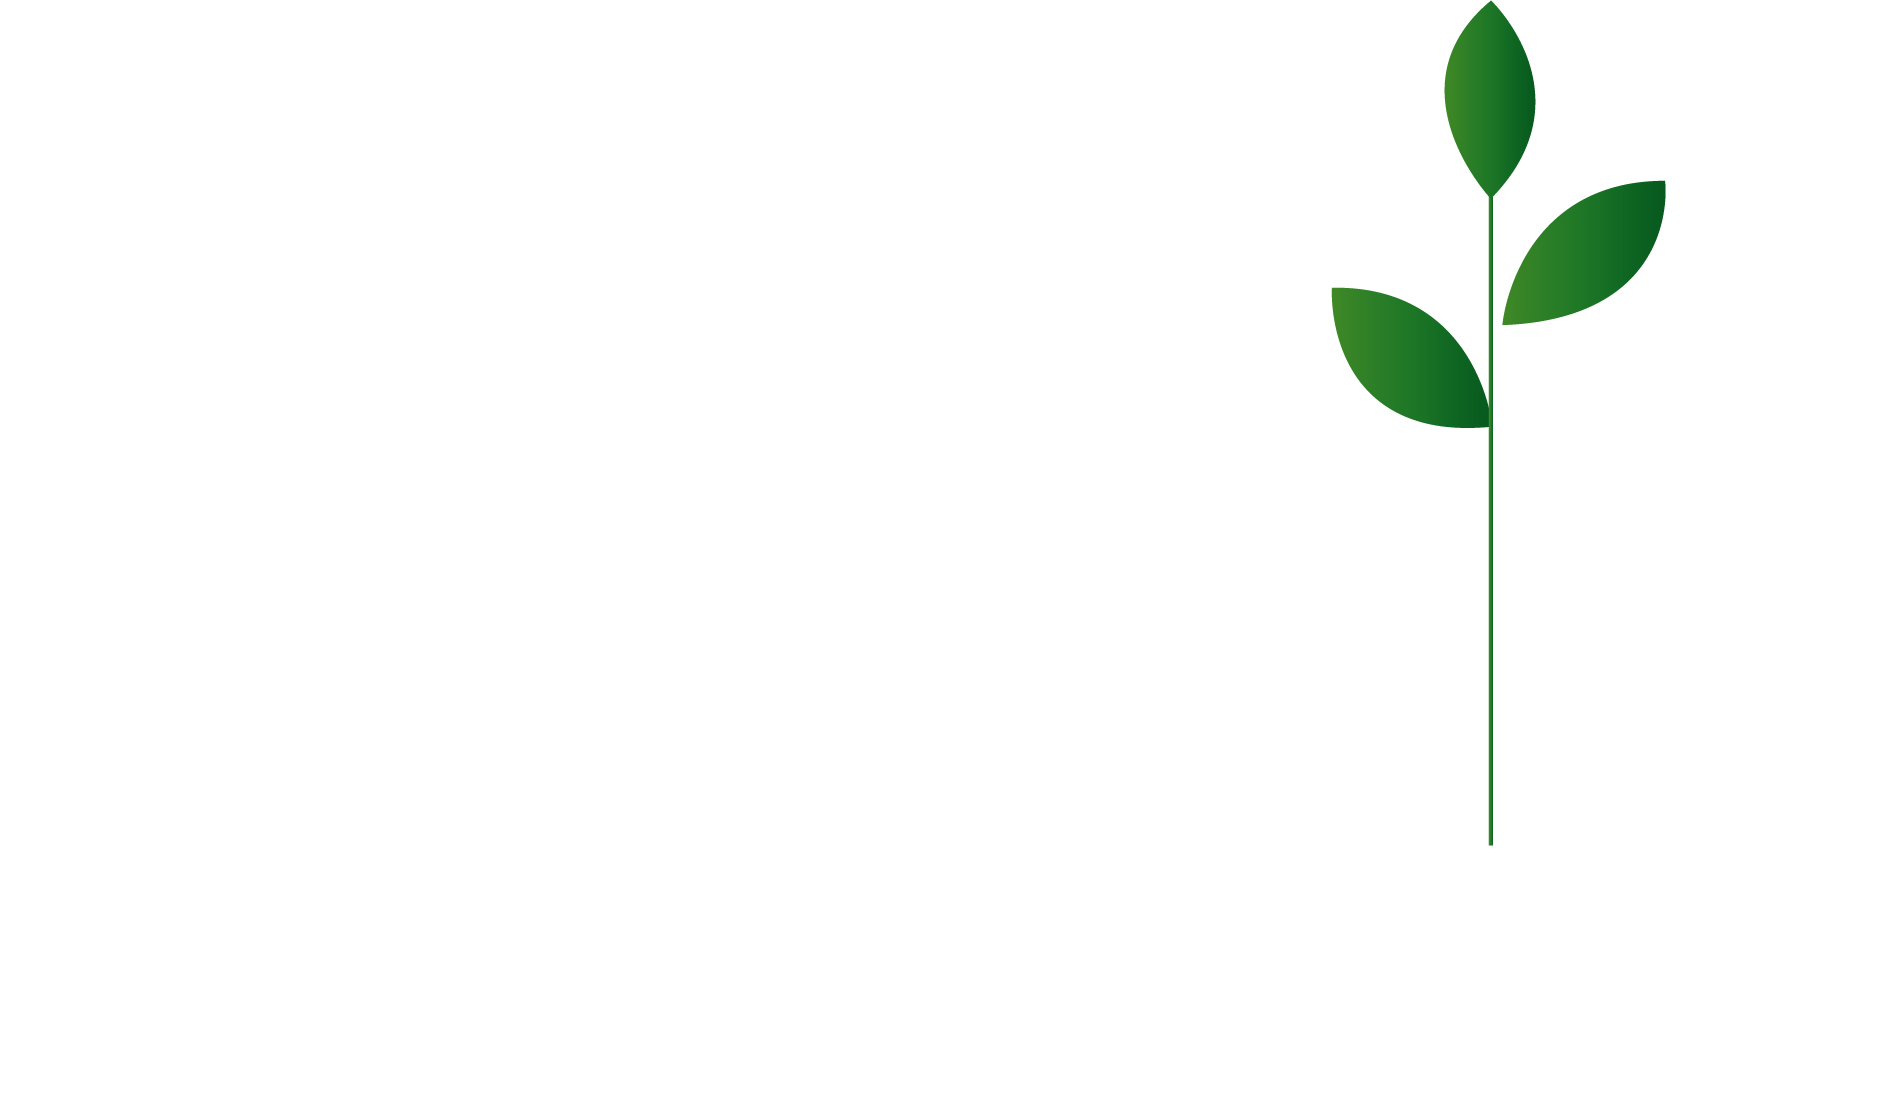 Oper-8 Inventory